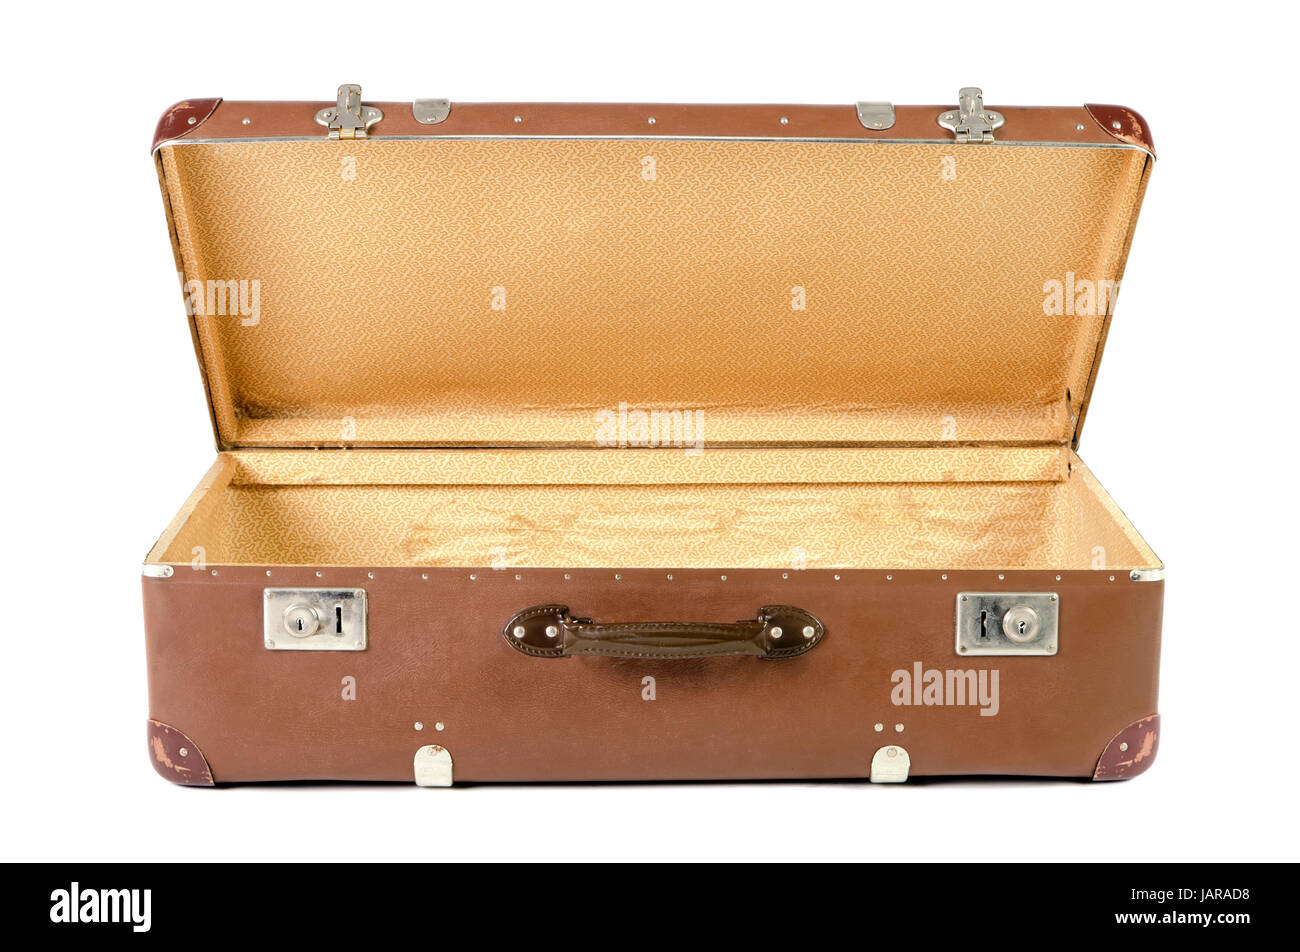 Koffer Packen Fotos e Imágenes de stock - Alamy